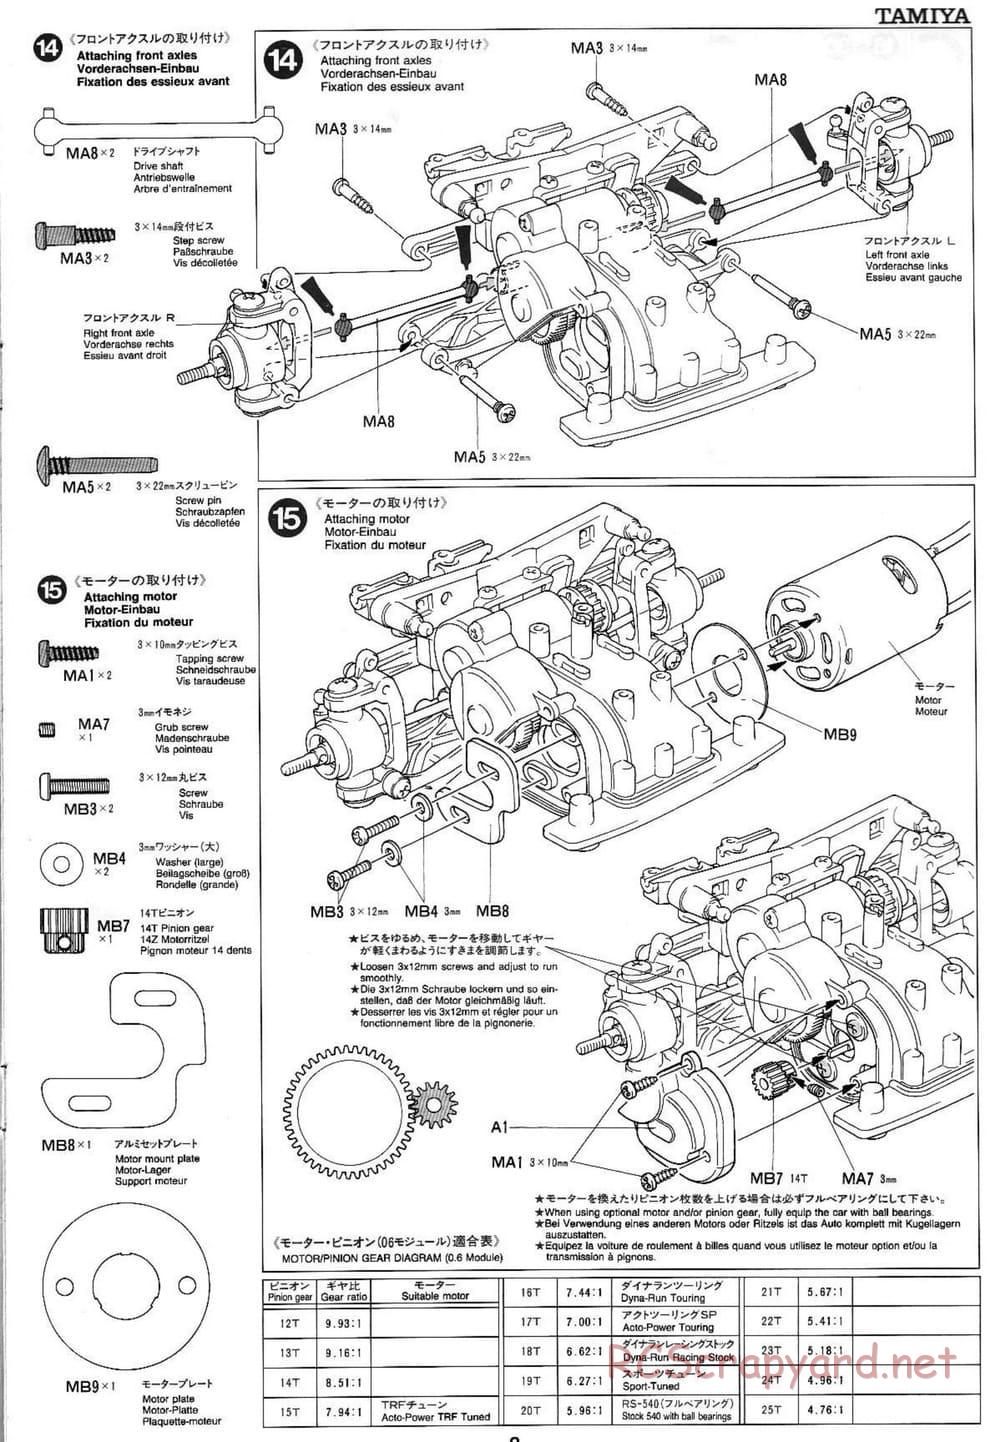 Tamiya - Mitsubishi Lancer Evolution V WRC - TA-03F Chassis - Manual - Page 9